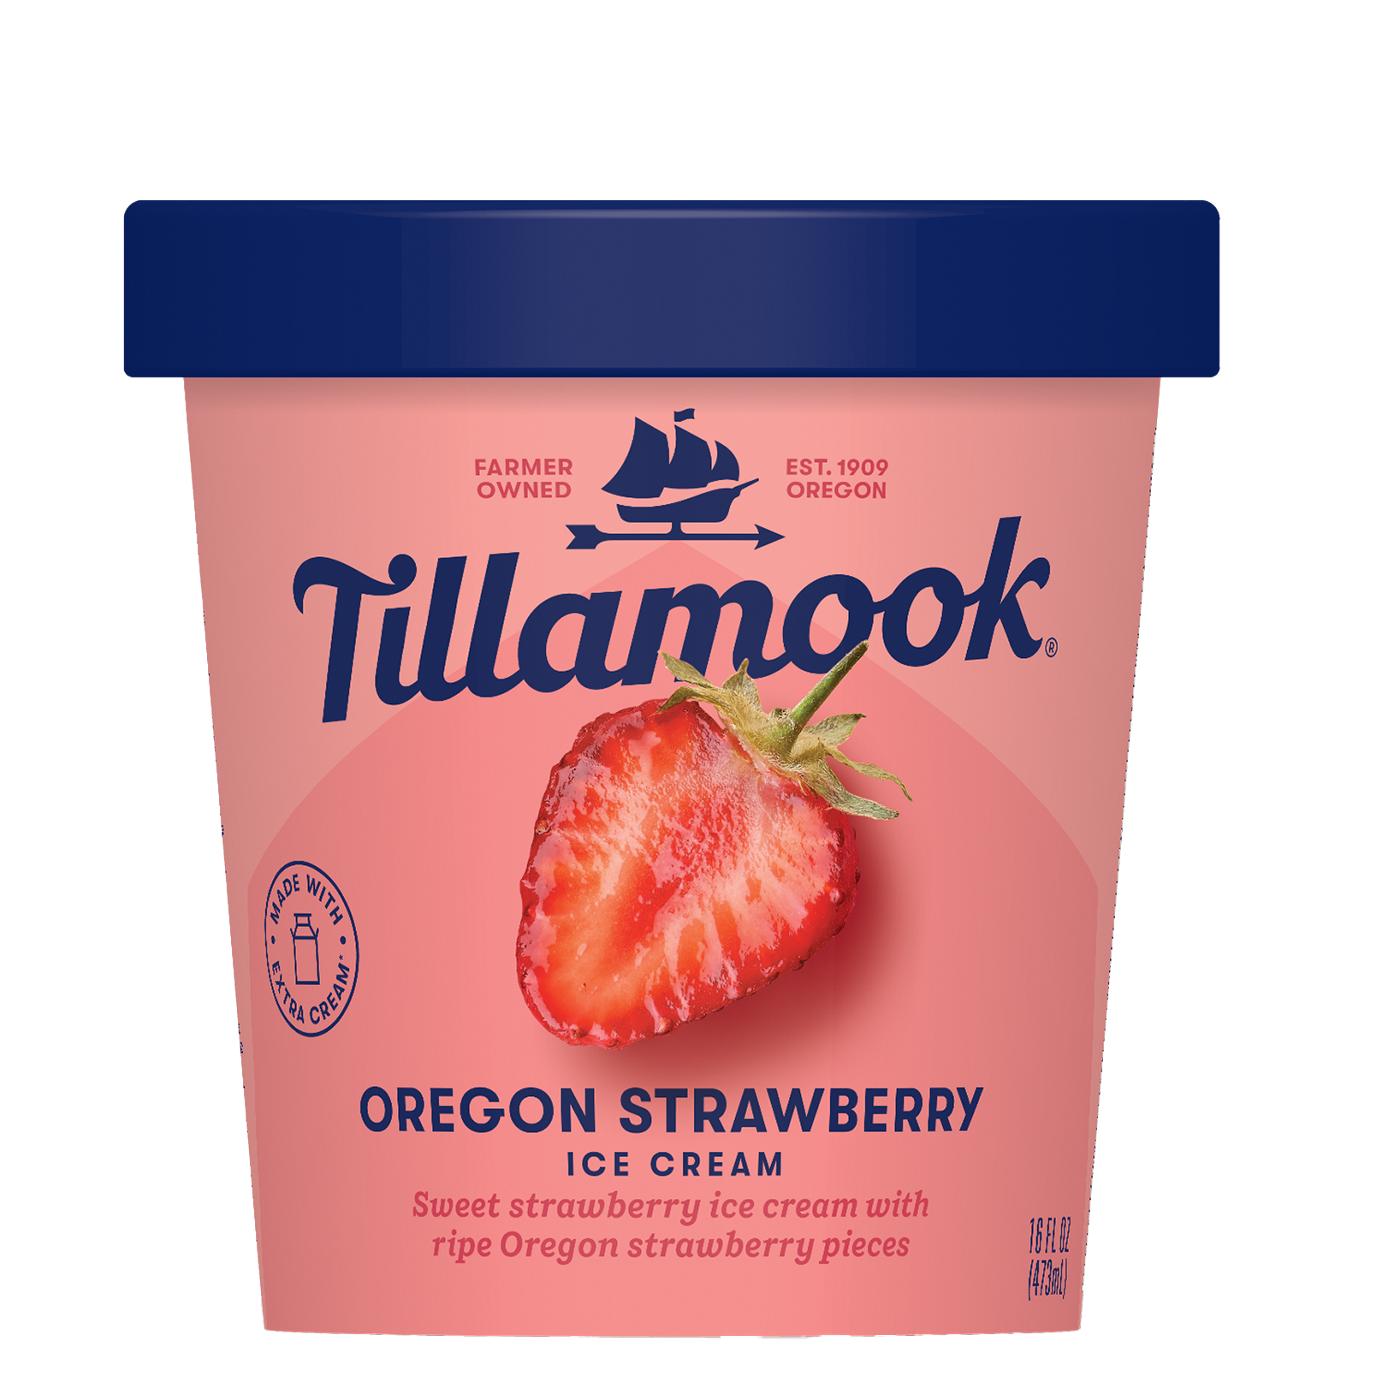 Tillamook Oregon Strawberry Ice Cream; image 1 of 2